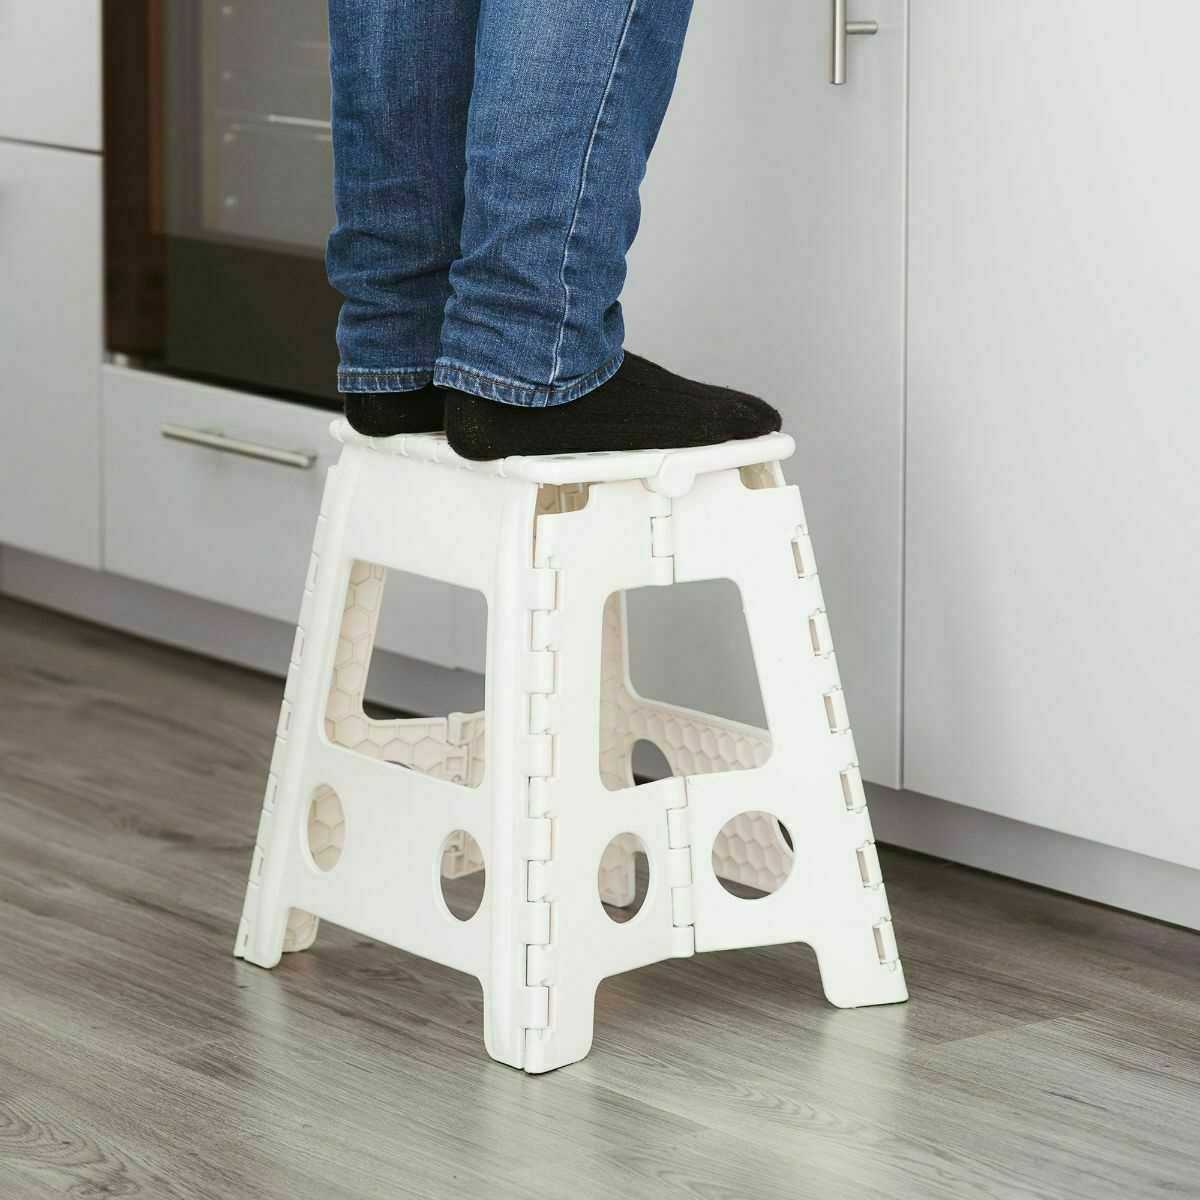 Small White Folding Step Stool Multi Purpose Home Kitchen Foldable Fold Up Step Stool